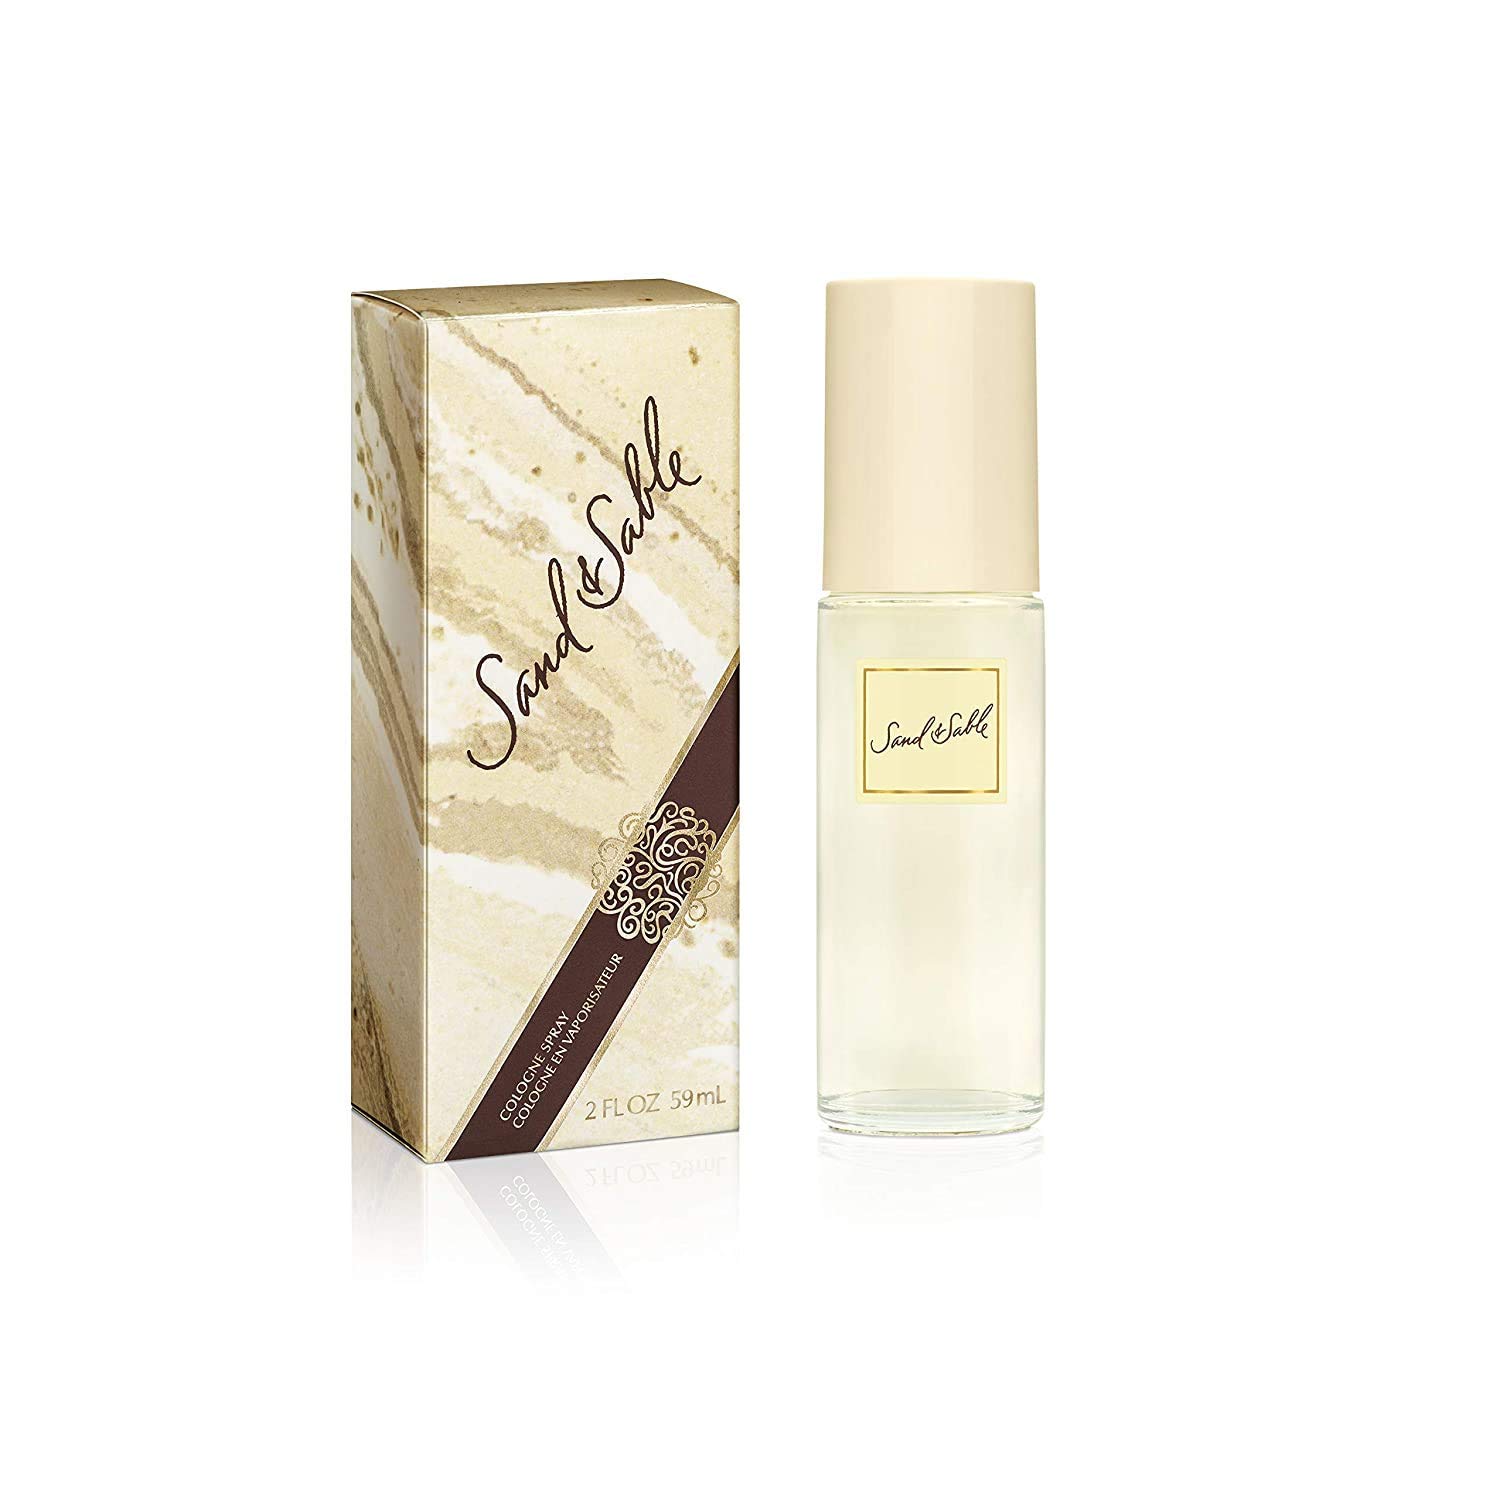 Sand & Sable Cologne Spray, Vegan Formula, Perfume, Irresistible Sweet Flower Notes, 2oz